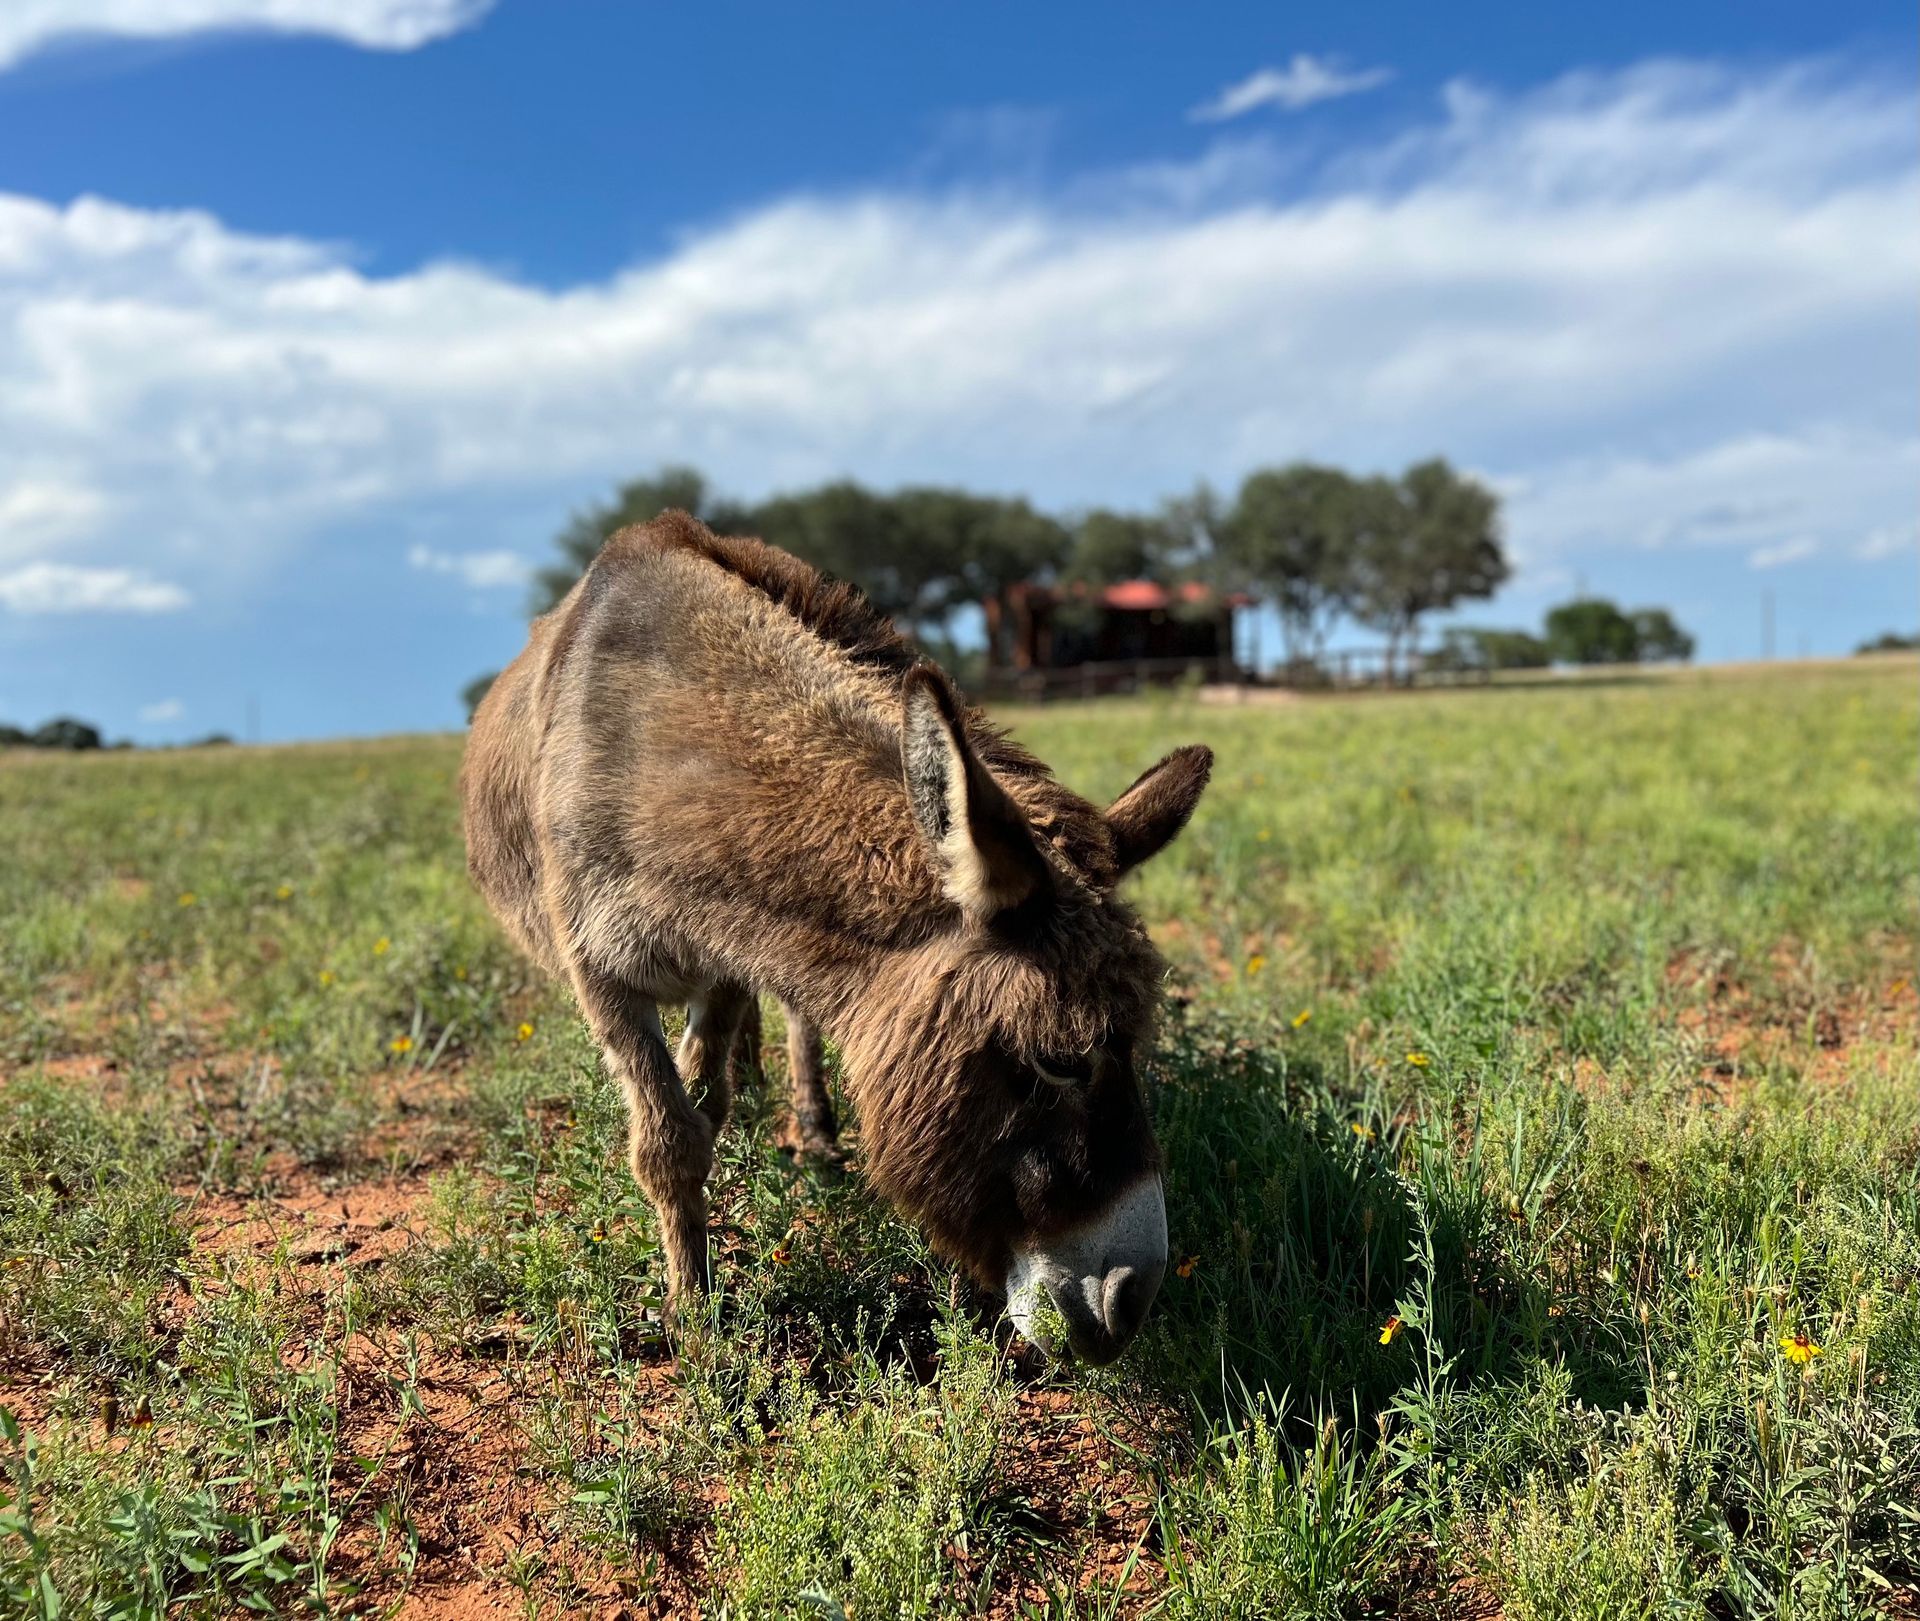 a donkey is grazing in a grassy field .